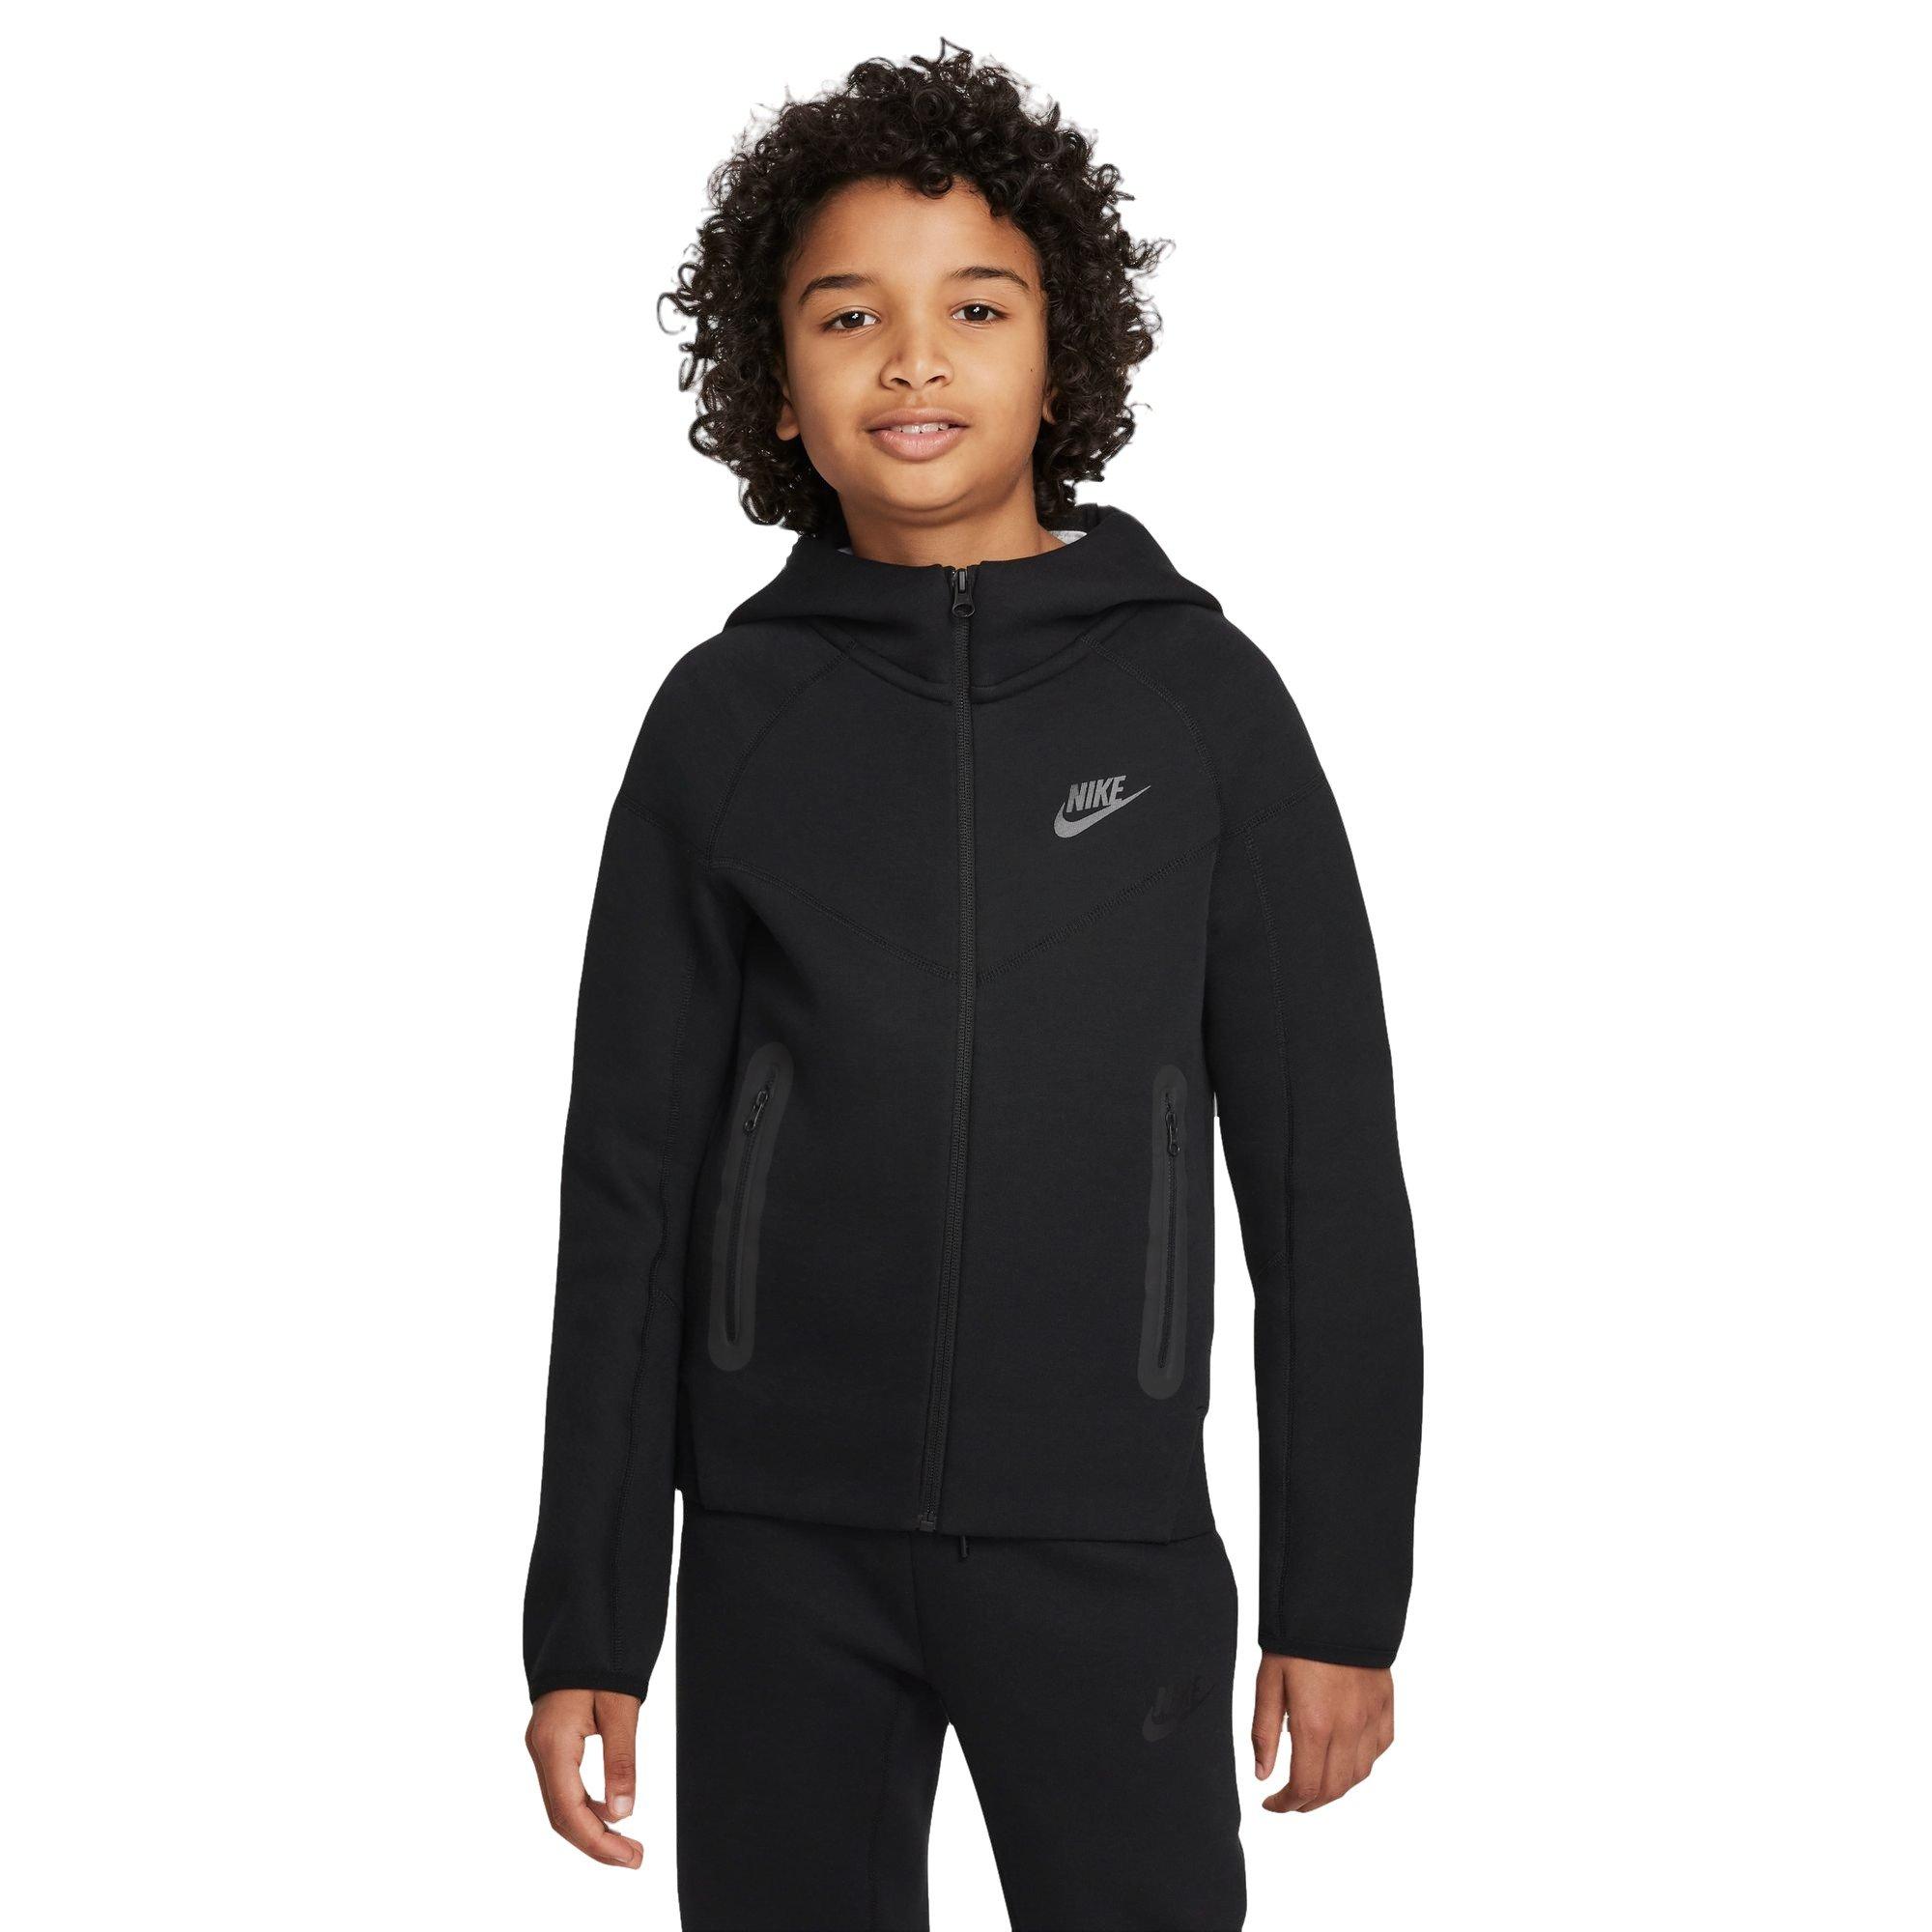 Nike Sportwear Tech Fleece Set (Jacket + Pant) Washed Teal/Black Size XL